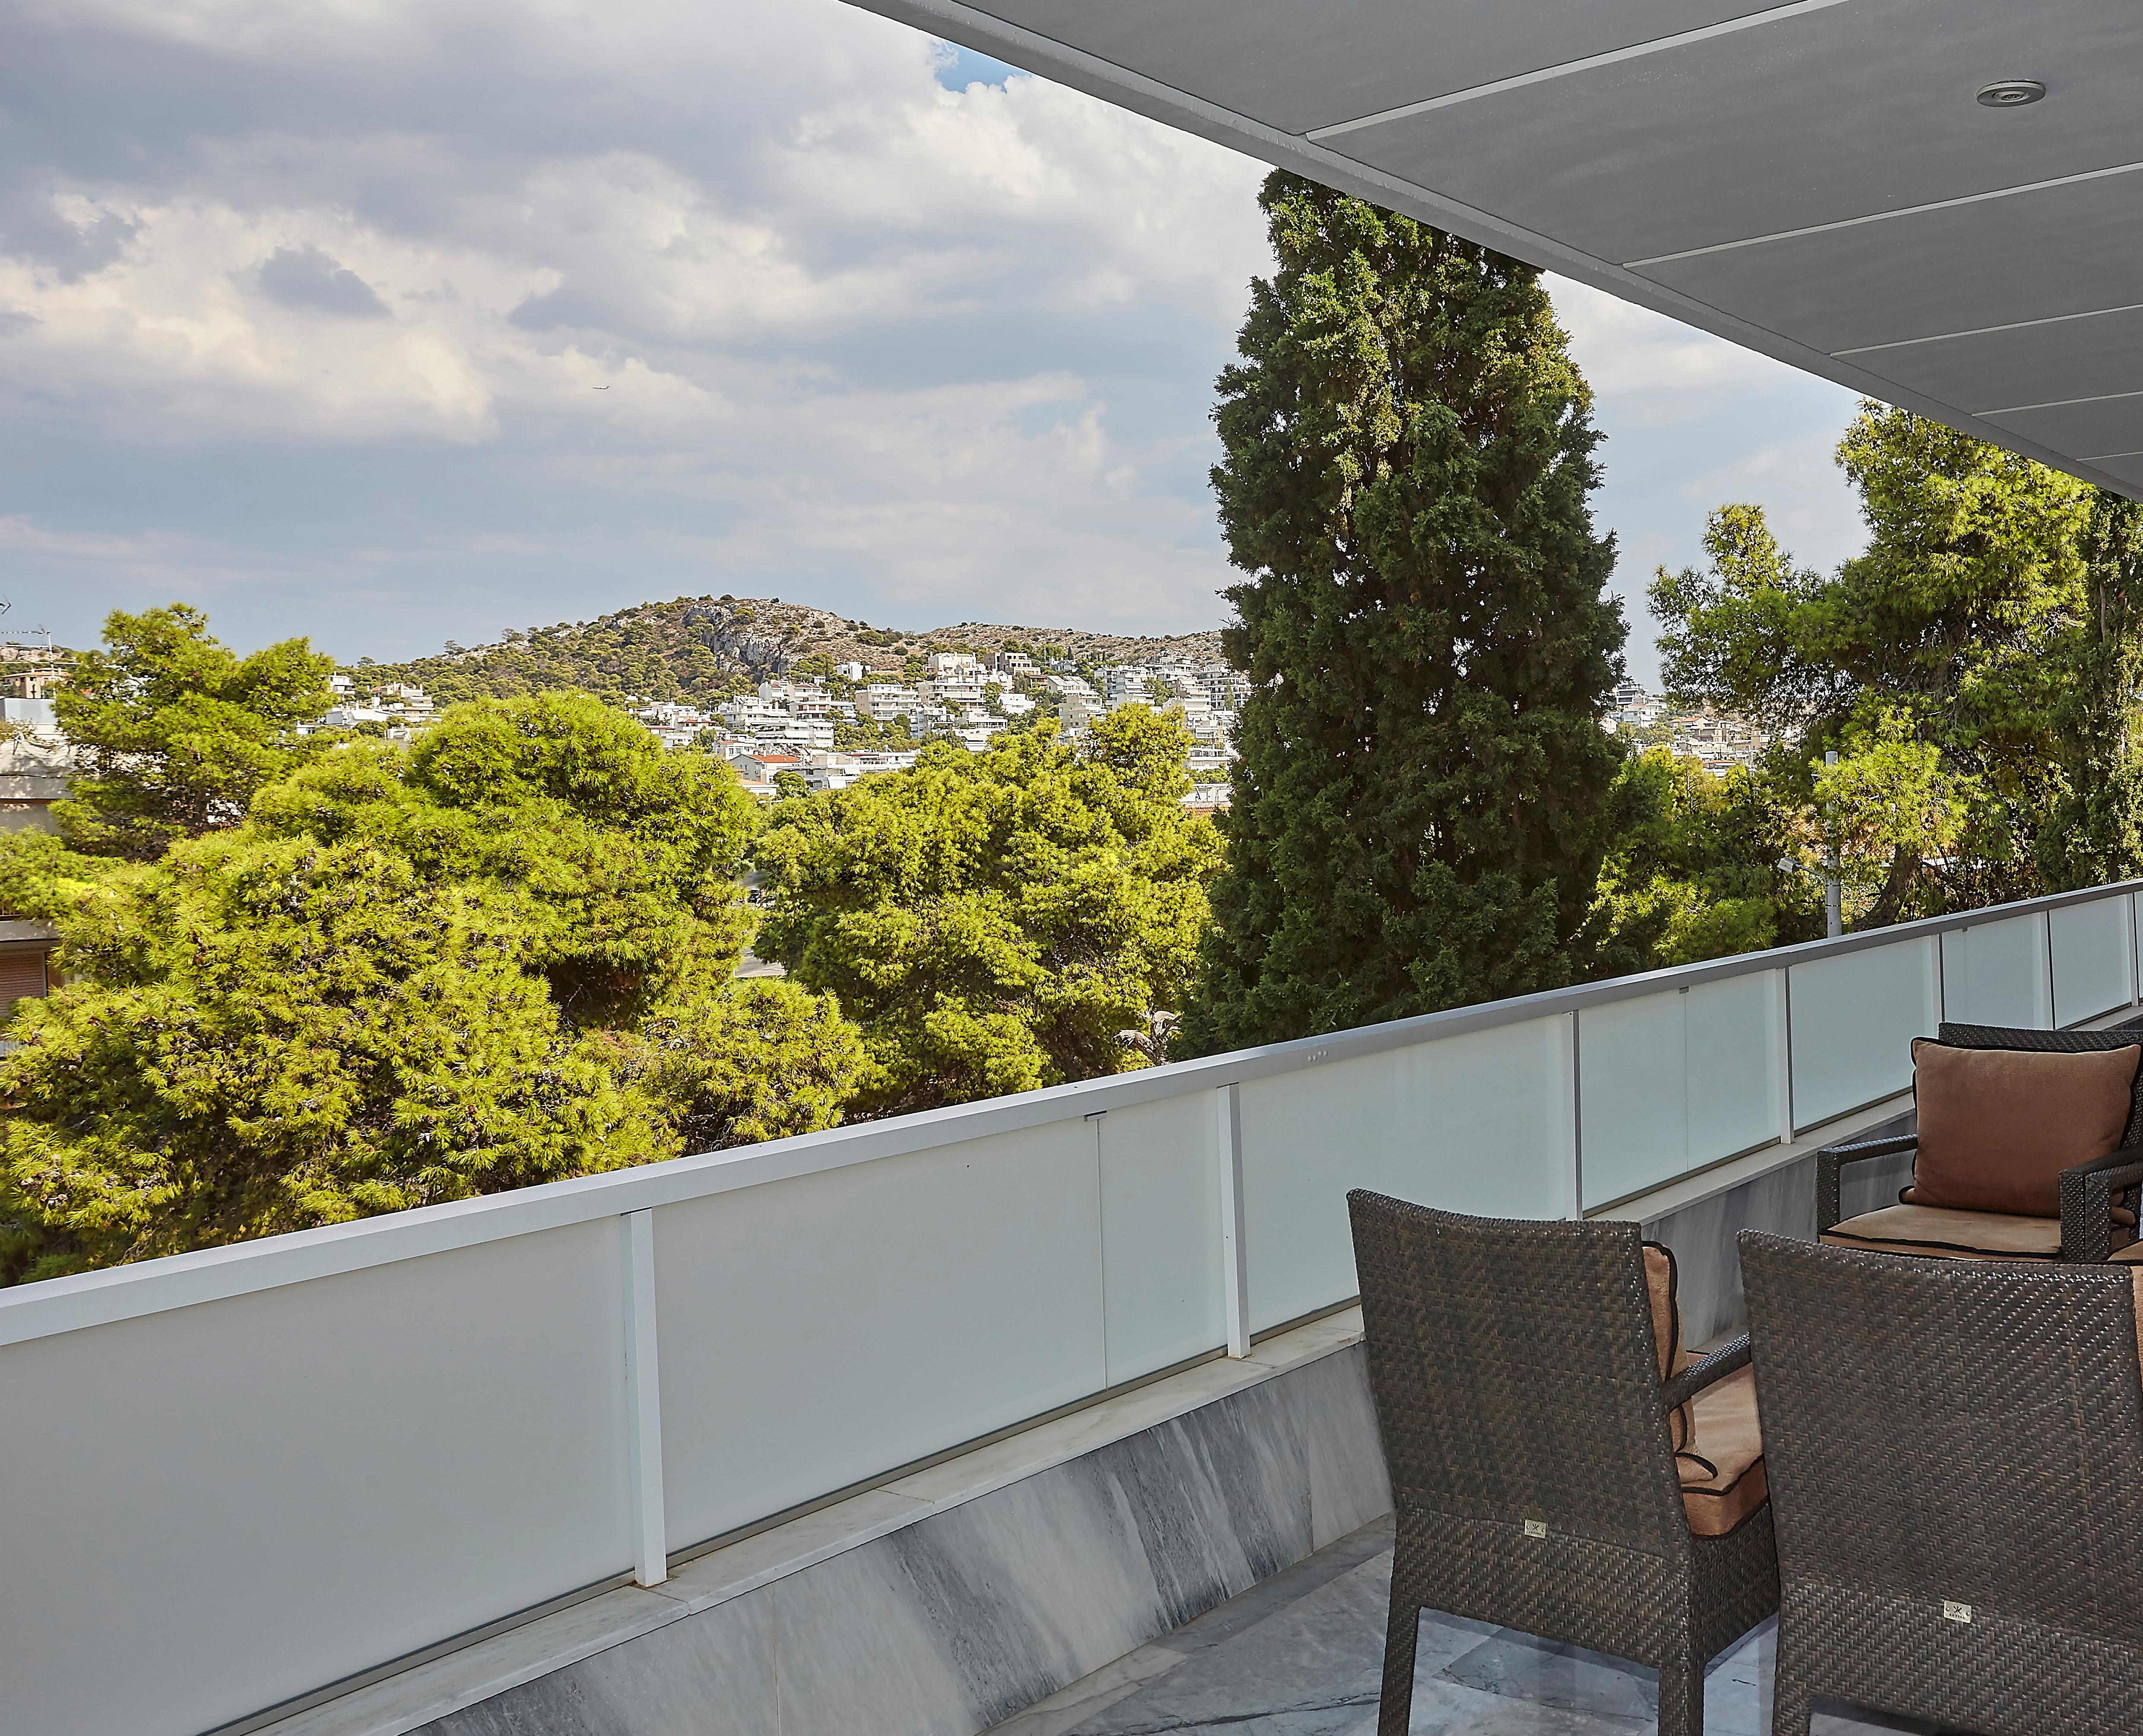 Athenian Riviera Hotel& Suites Exterior photo